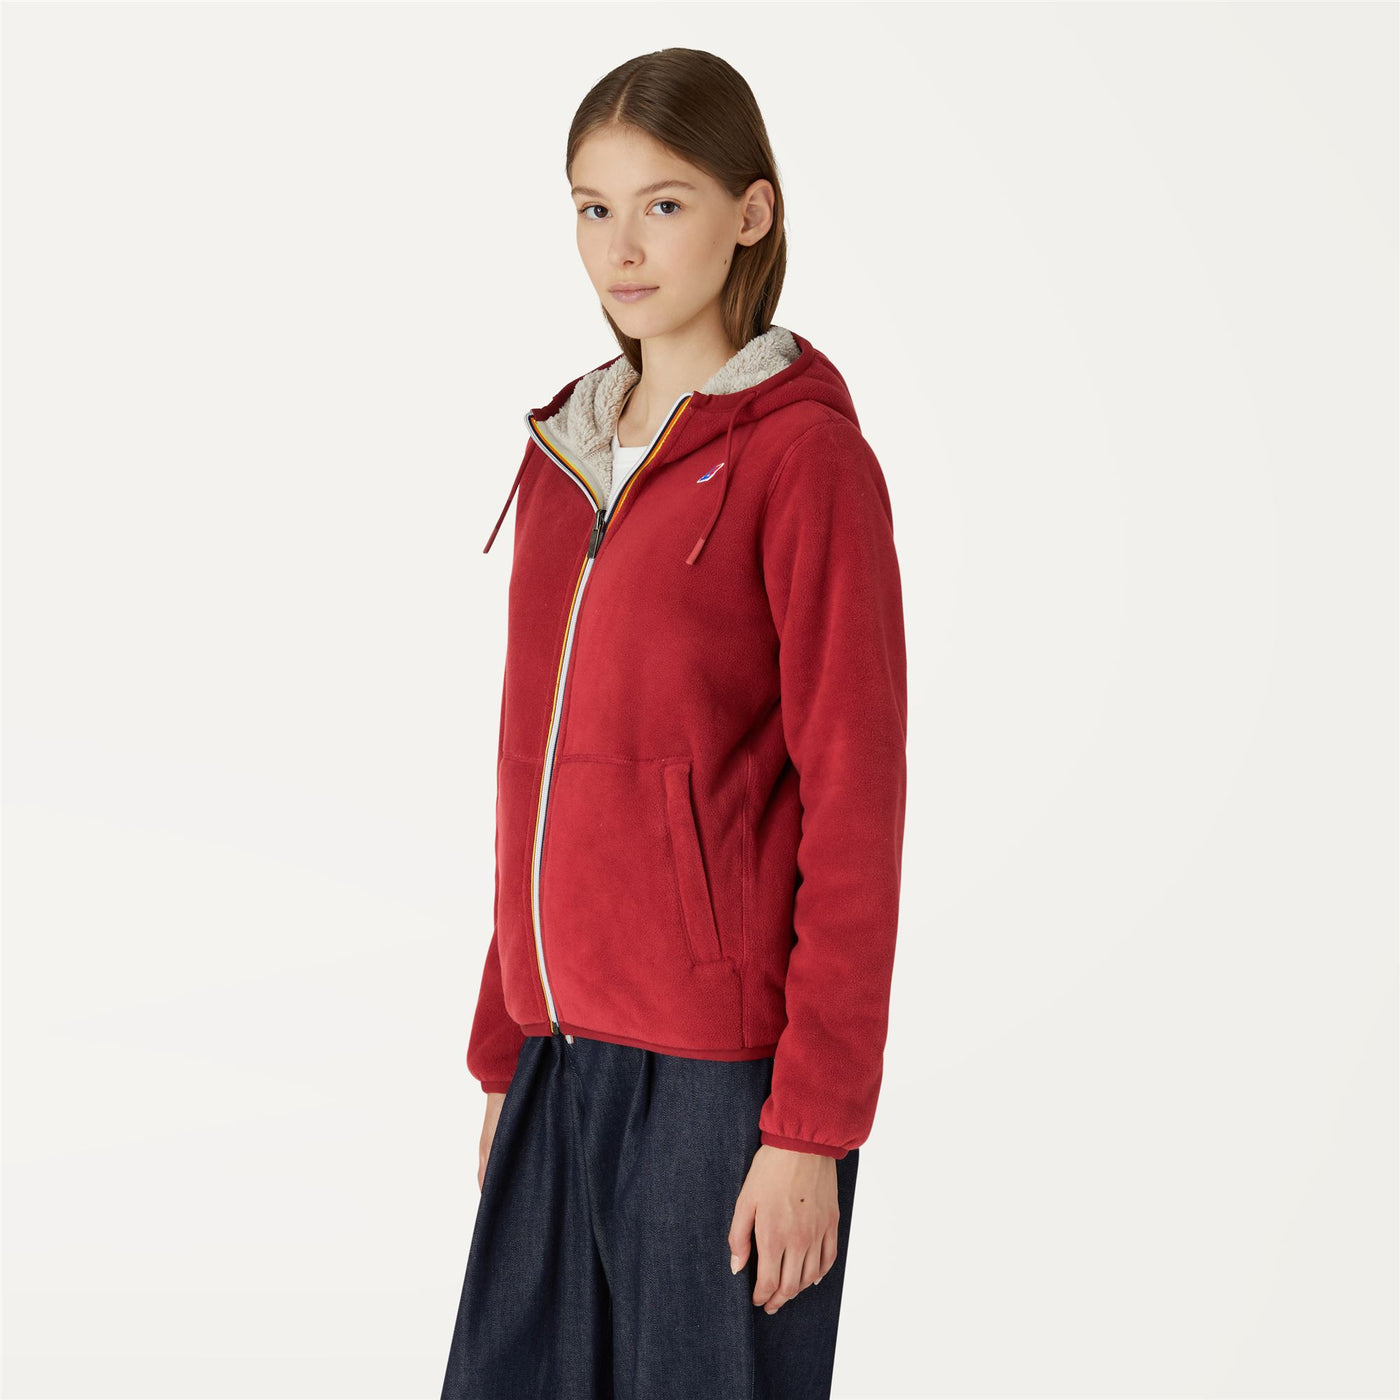 Fleece Woman LILY POLAR REVERSIBLE Jacket RED DK - BEIGE GREY Detail (jpg Rgb)			